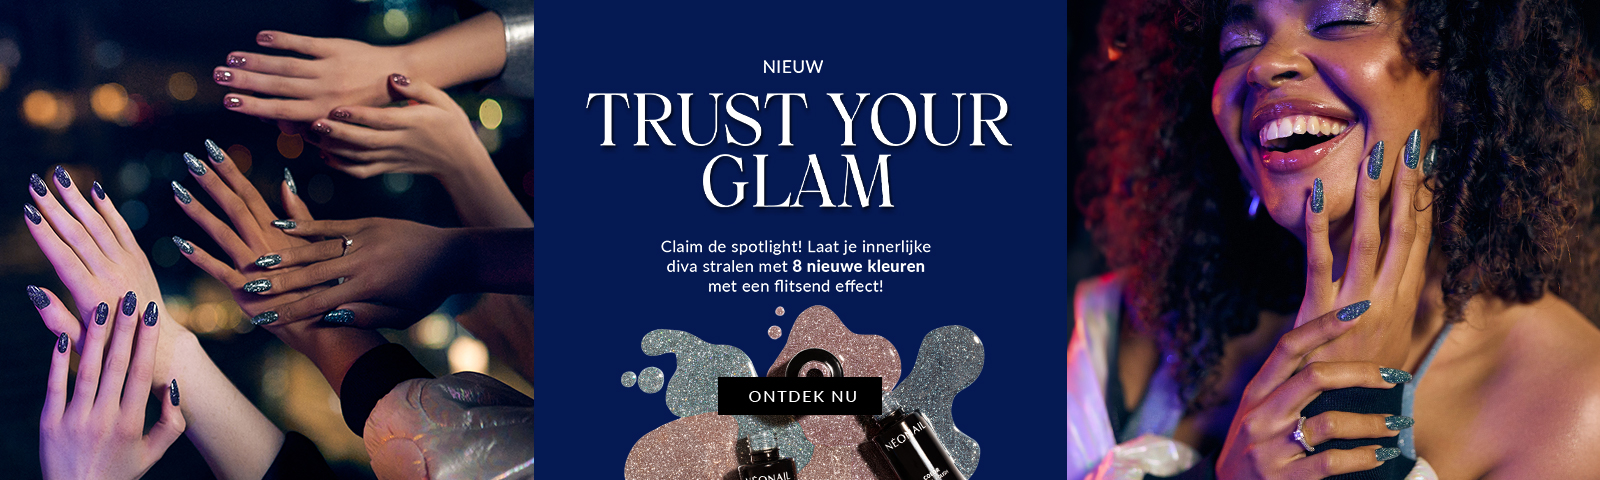 Trust Your Glam - 24.10  